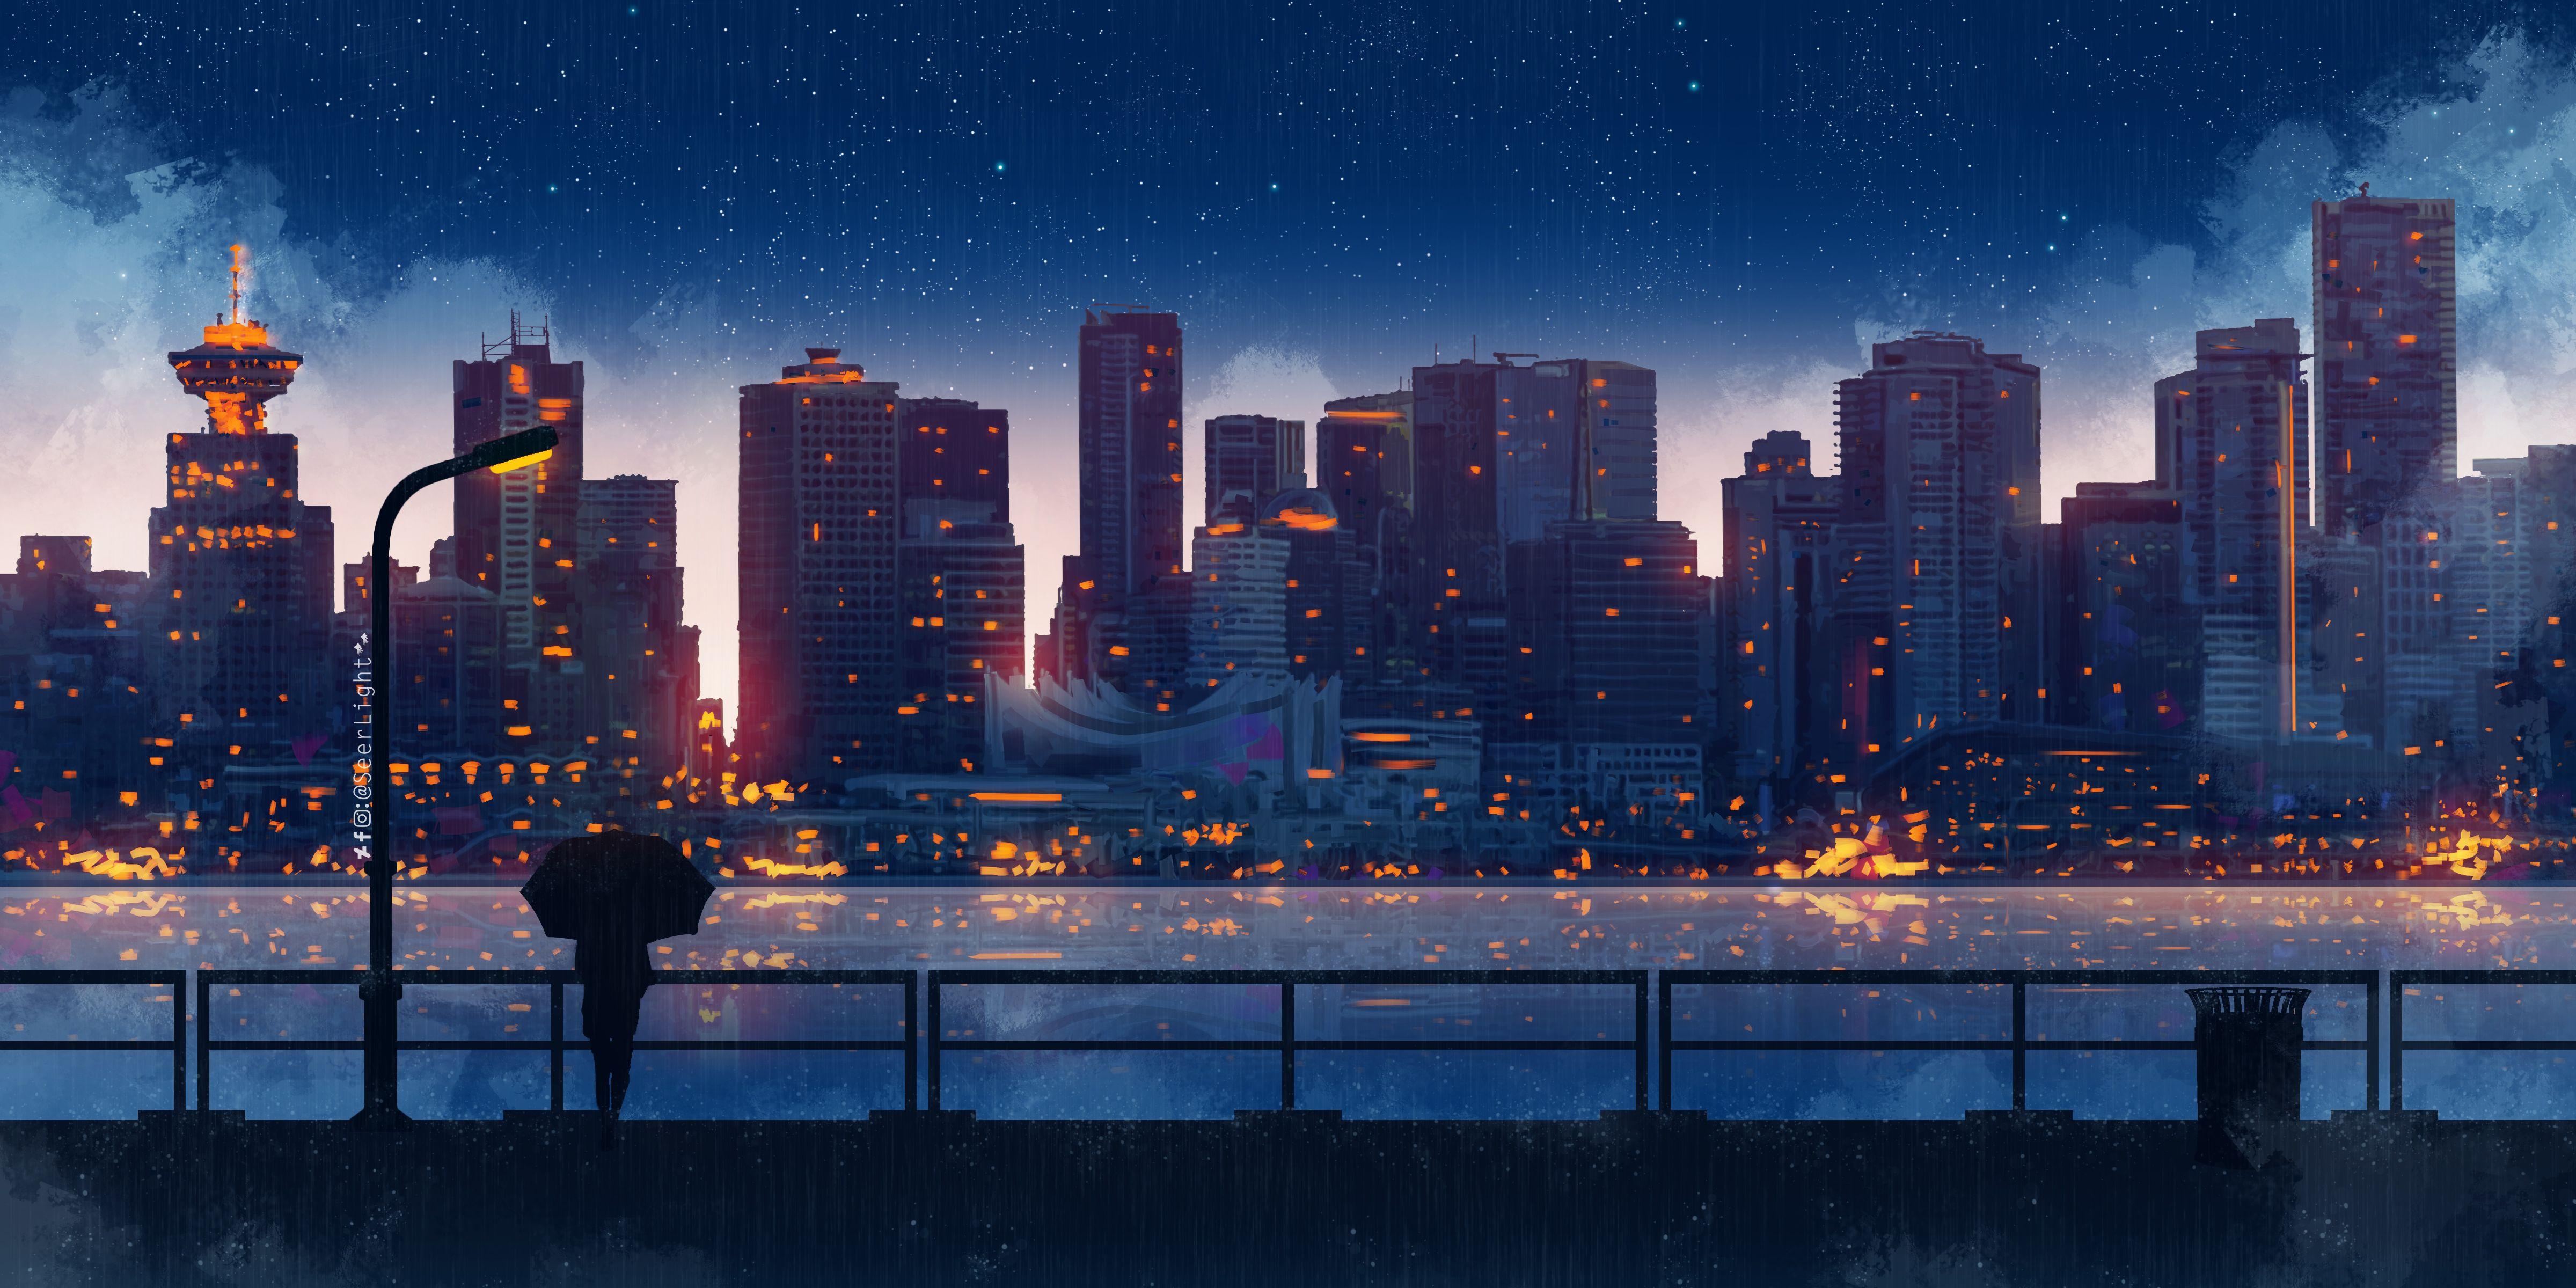 4800x2400 Anime City Night Background